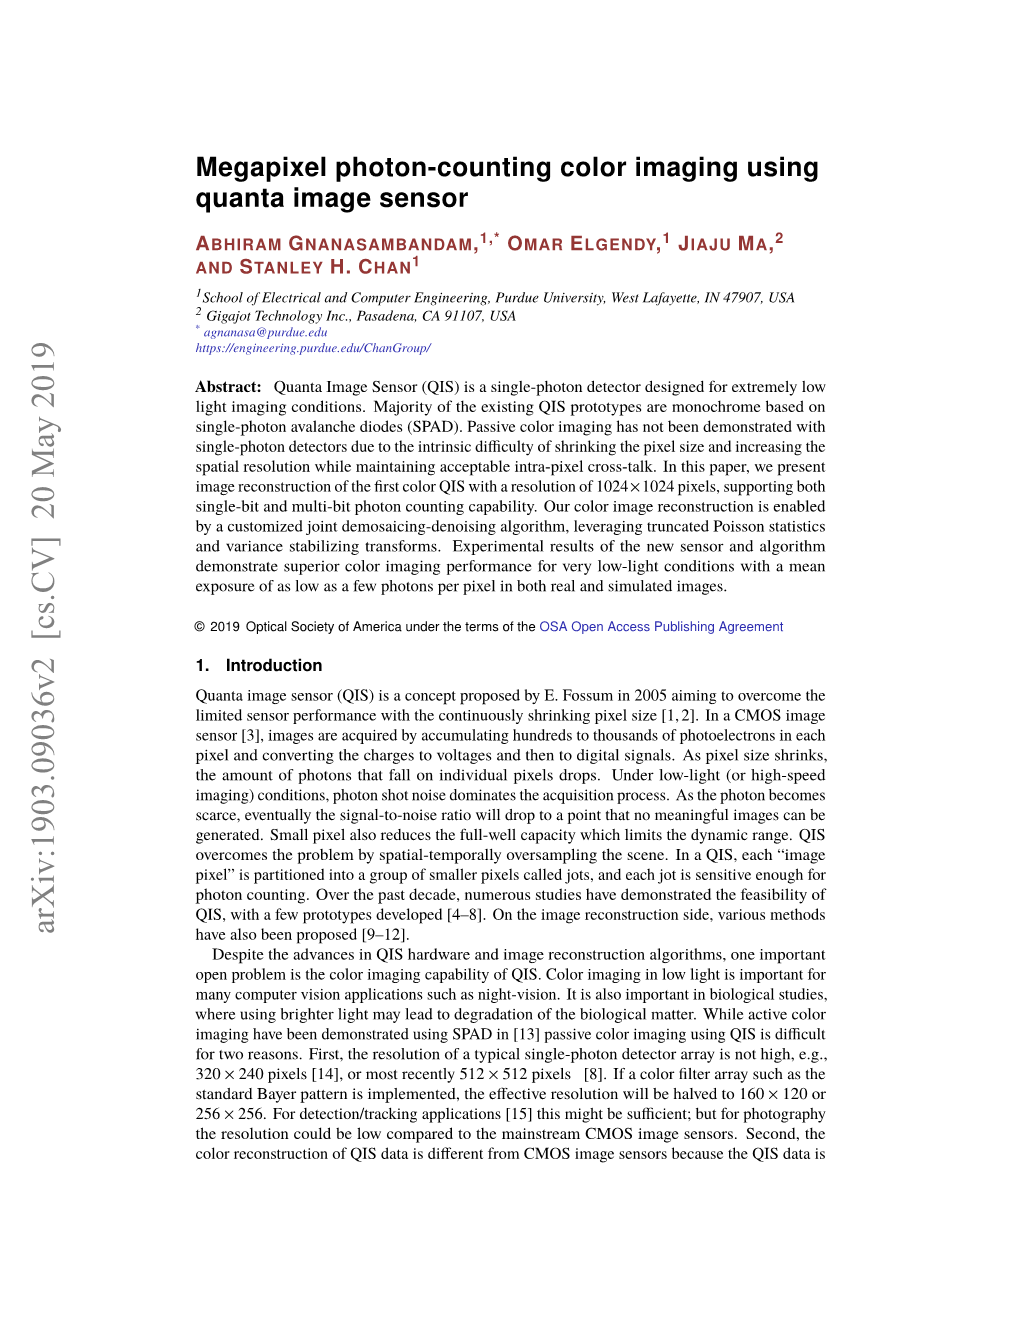 Megapixel Photon-Counting Color Imaging Using Quanta Image Sensor